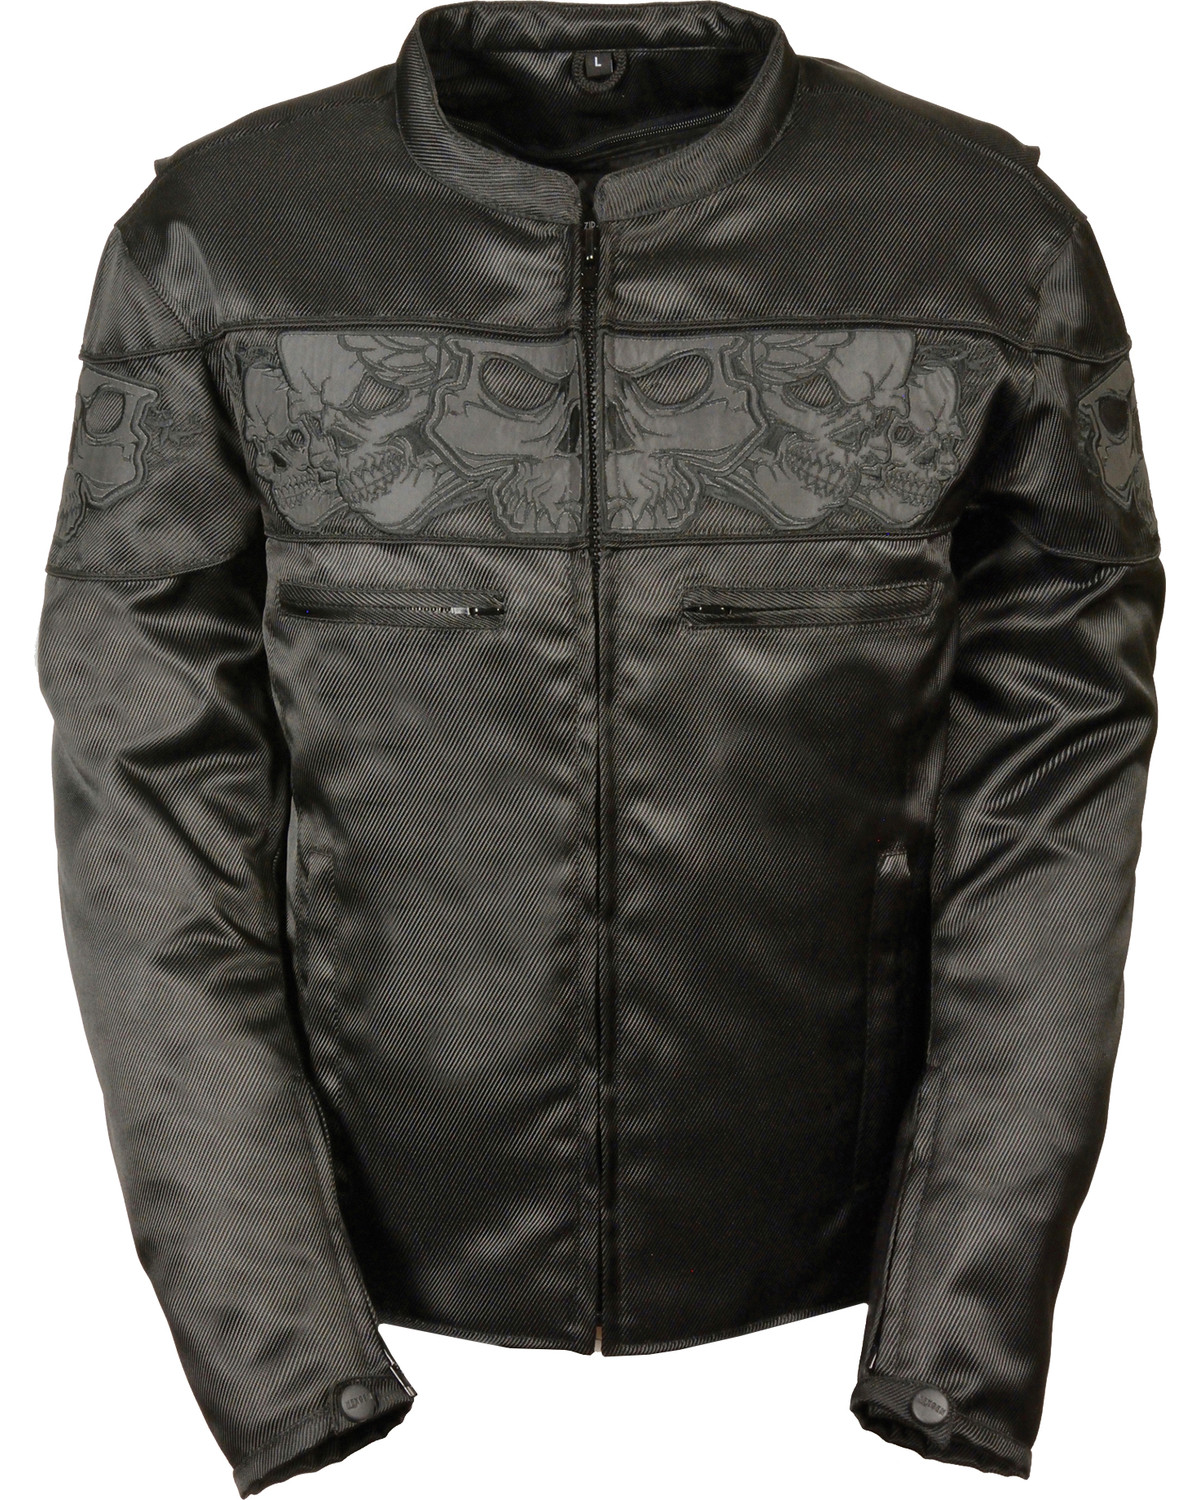 Milwaukee Leather Men's Reflective Skulls Textile Jacket